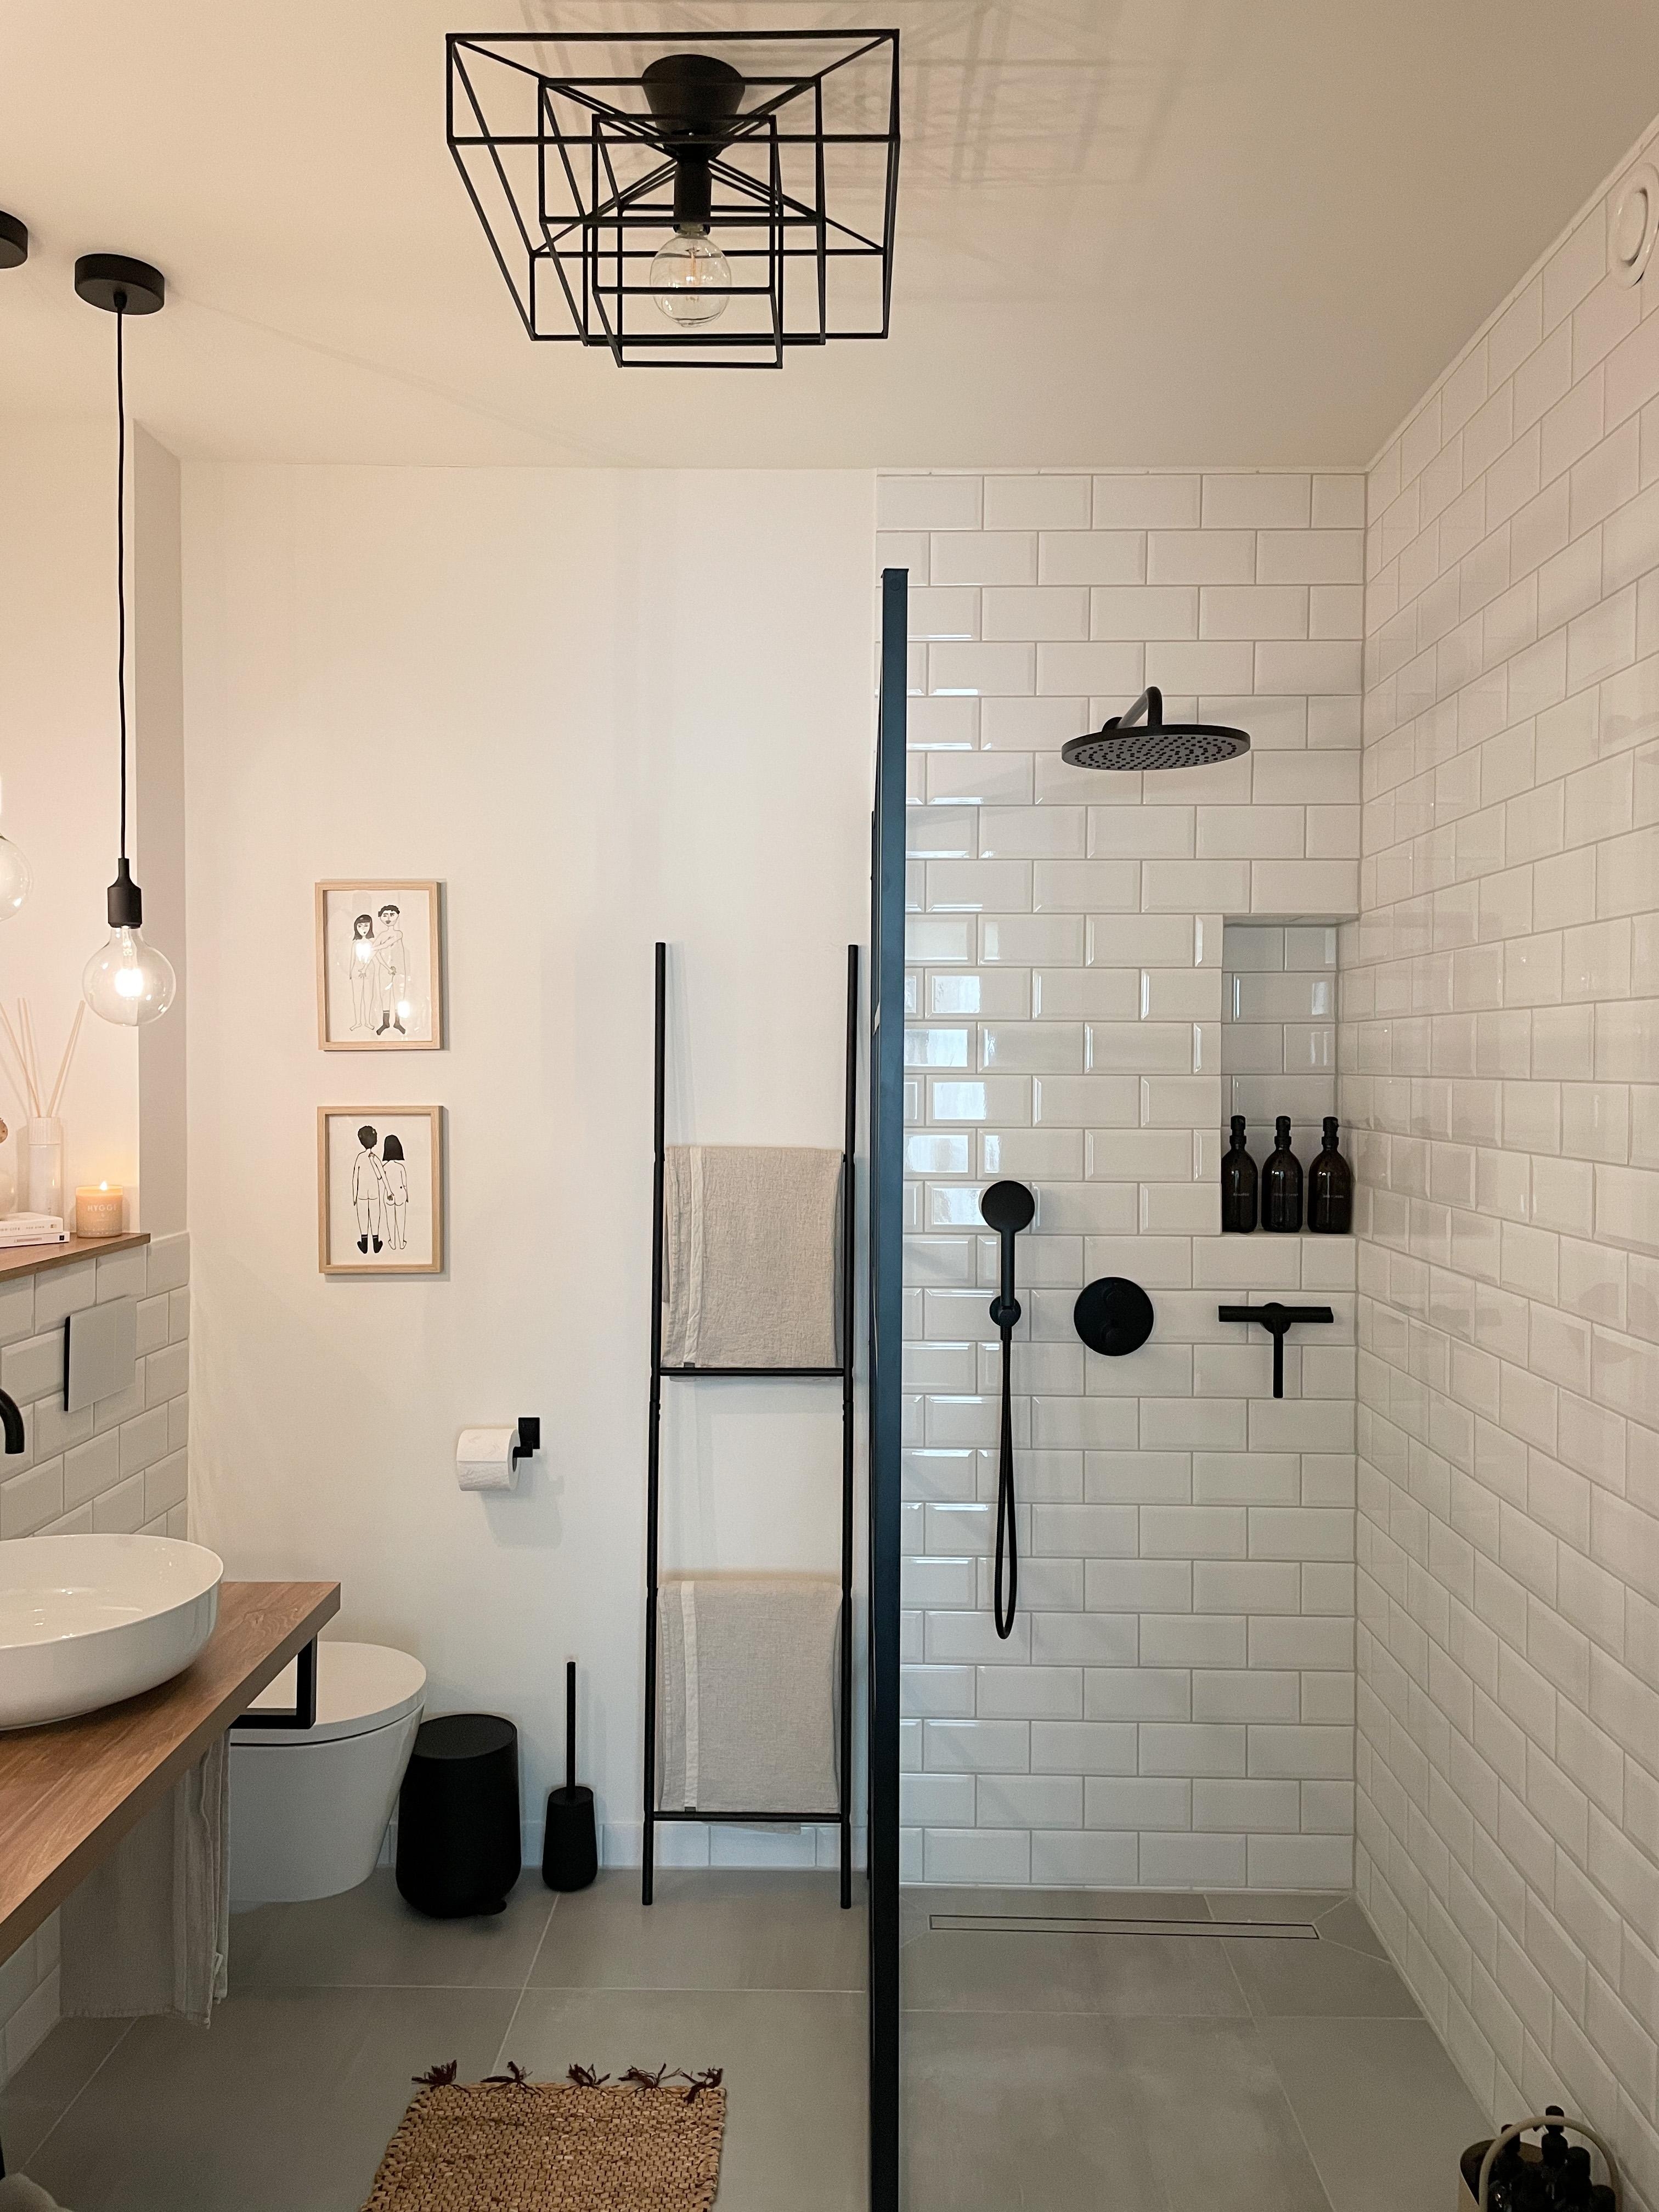 Master Bathroom
🖤
#Badezimmerinspo #Badezimmerideen #Badezimmerdeko #Badezimmer #schwarzweiß